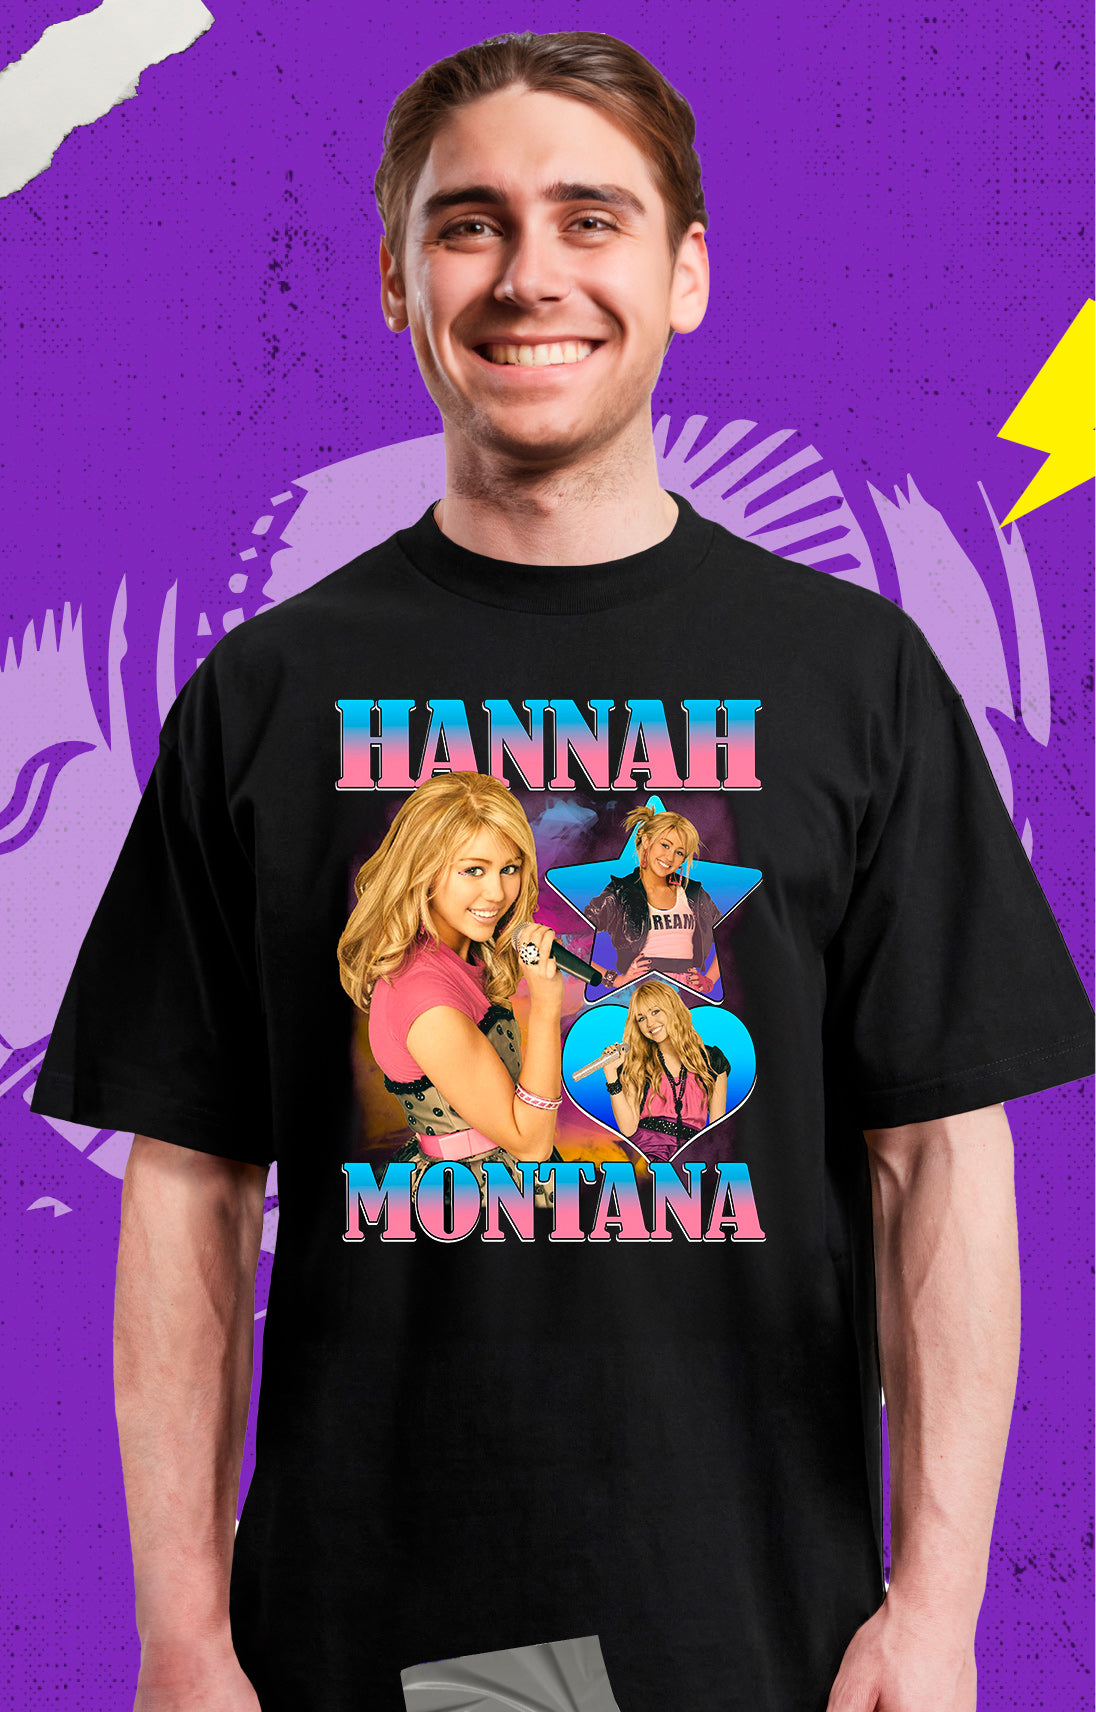 Hannah Montana - Collage - Polera